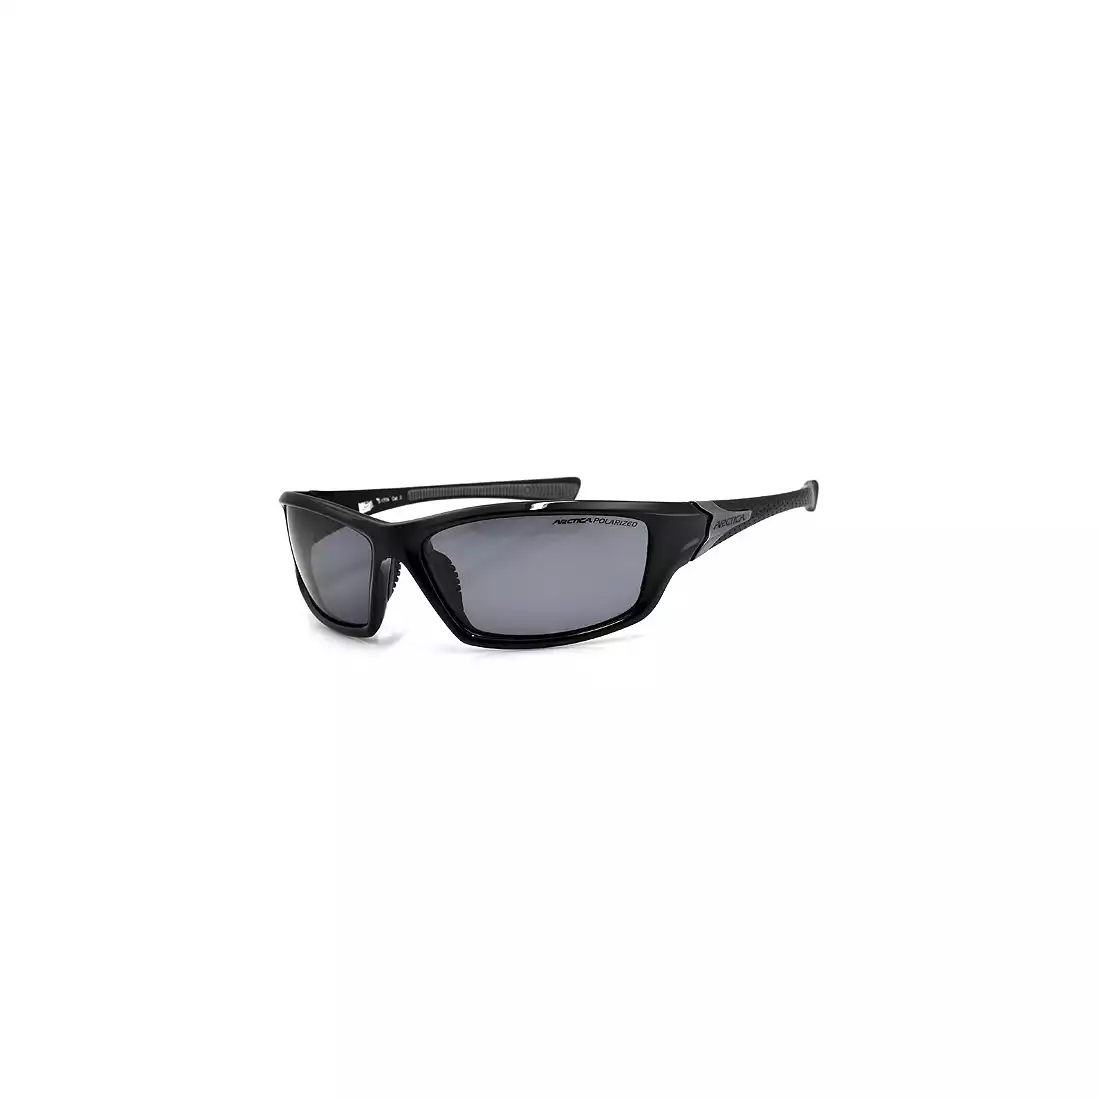 ARCTICA okulary sportowe S-177 - kolor: Czarno-srebrny